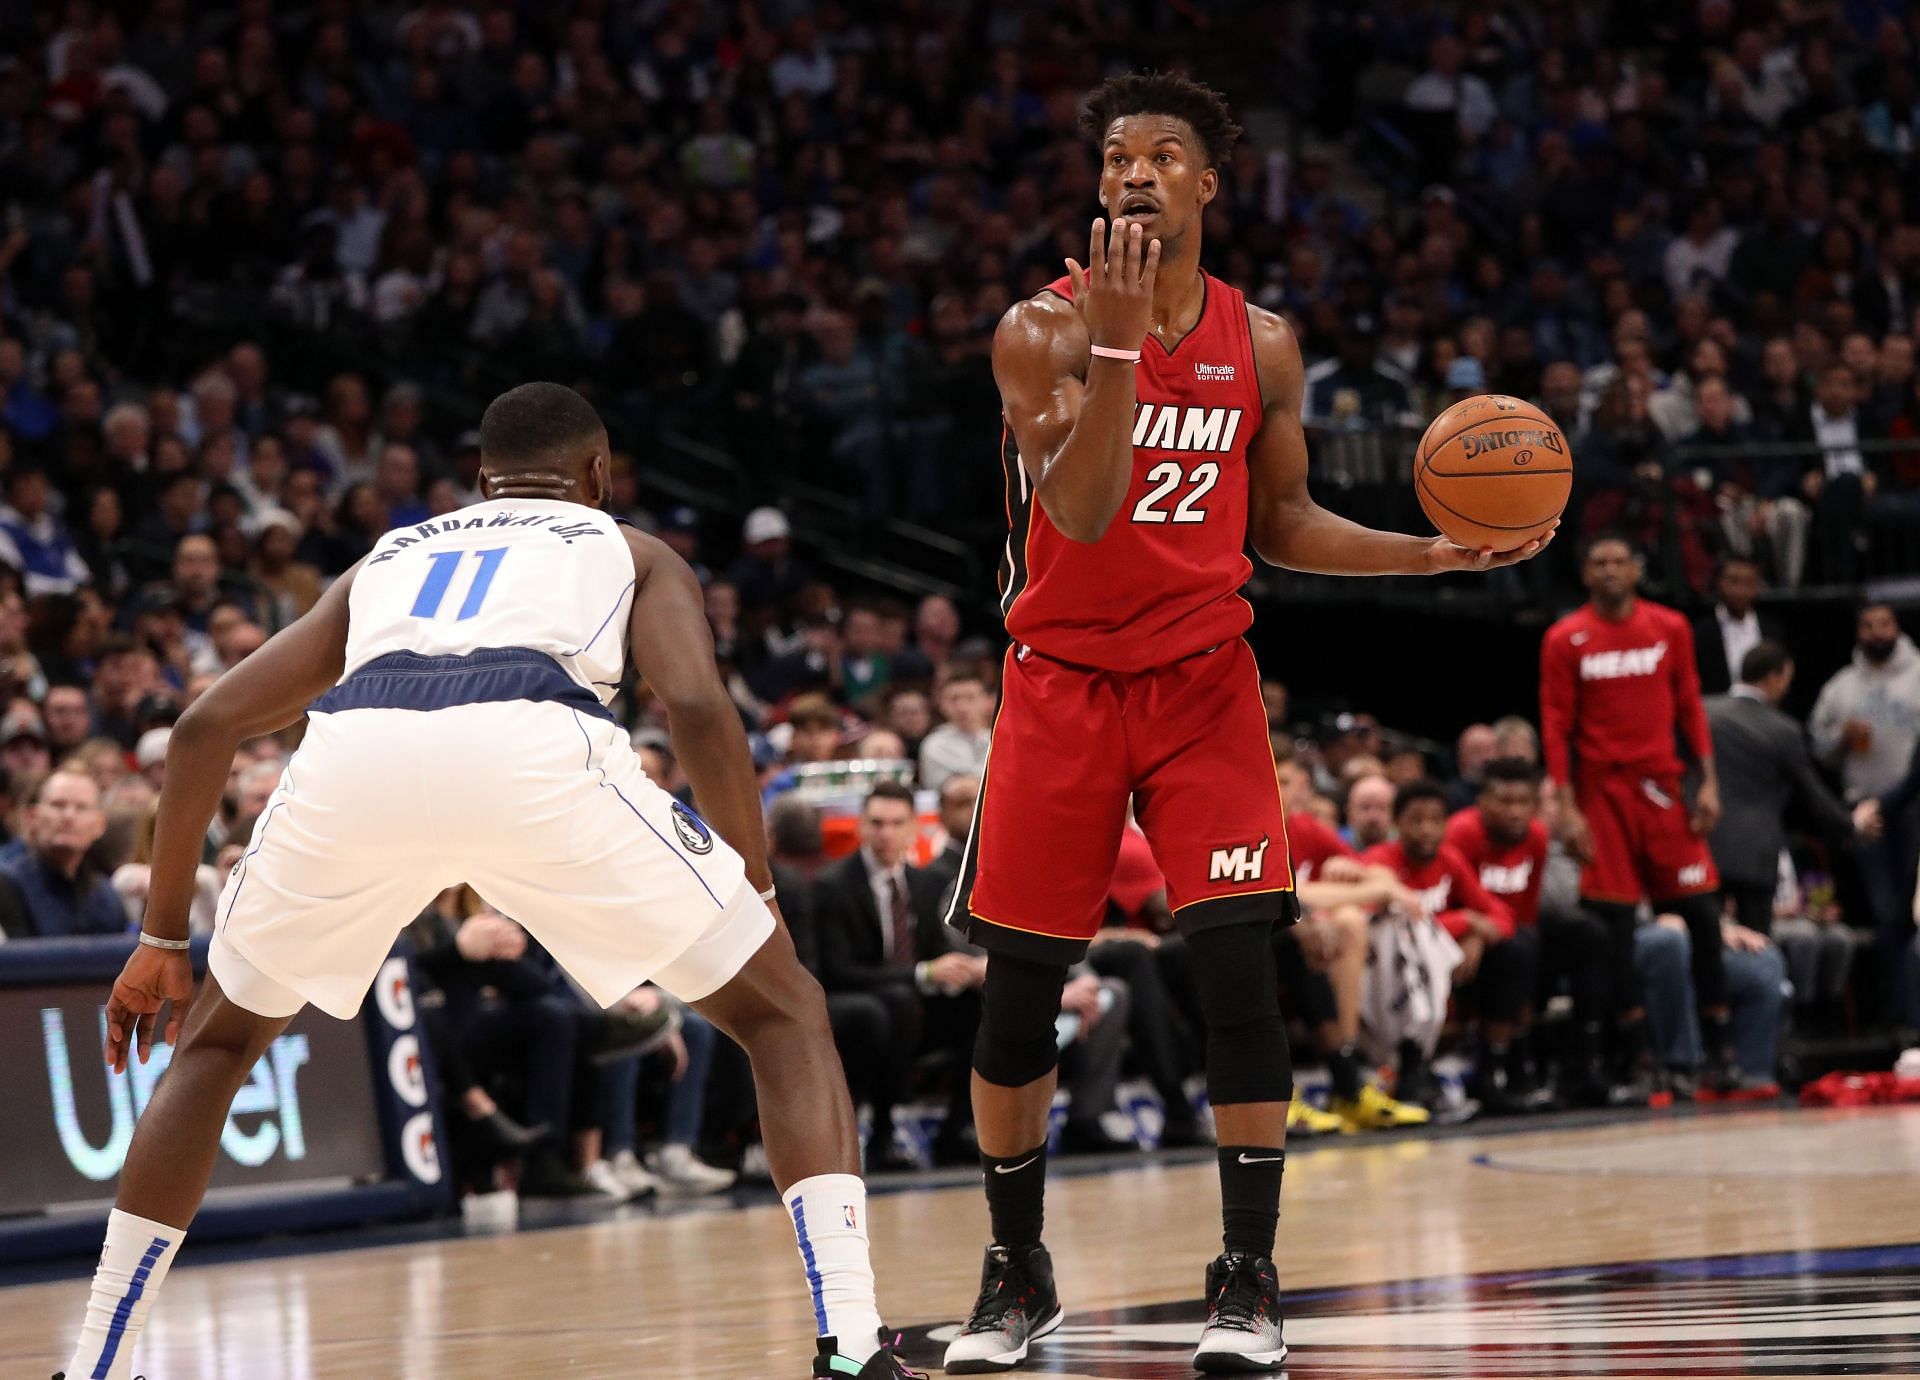 Miami Heat will take on the Dallas Mavericks at the FTX Arena on Tuesday.